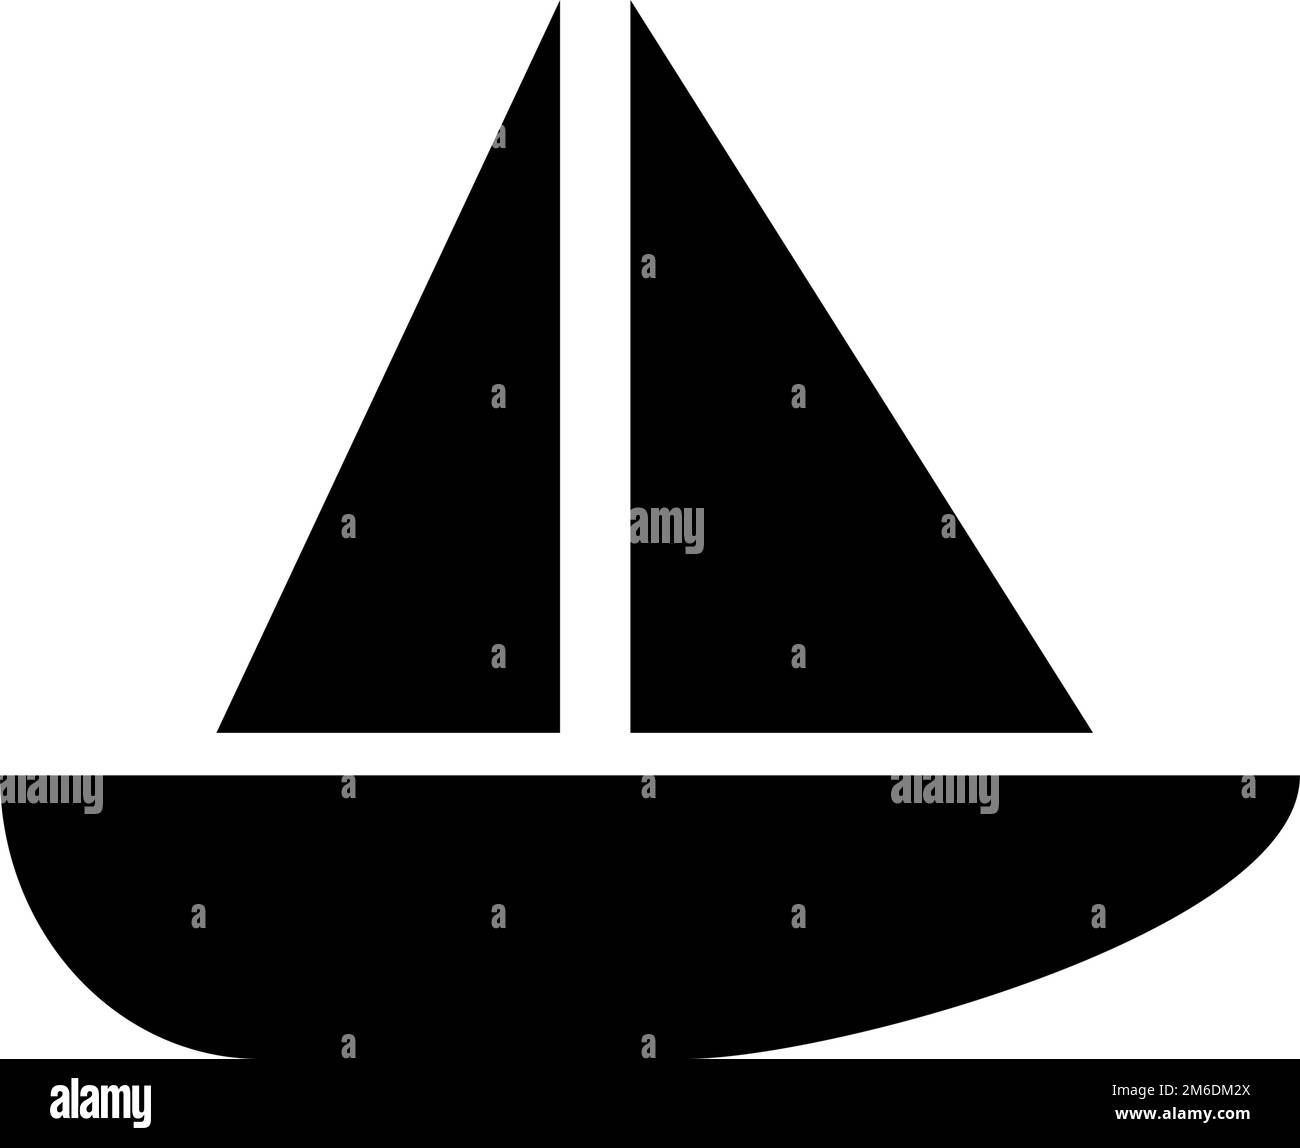 Yacht silhouette icon. Sailboat. Editable vector. Stock Vector